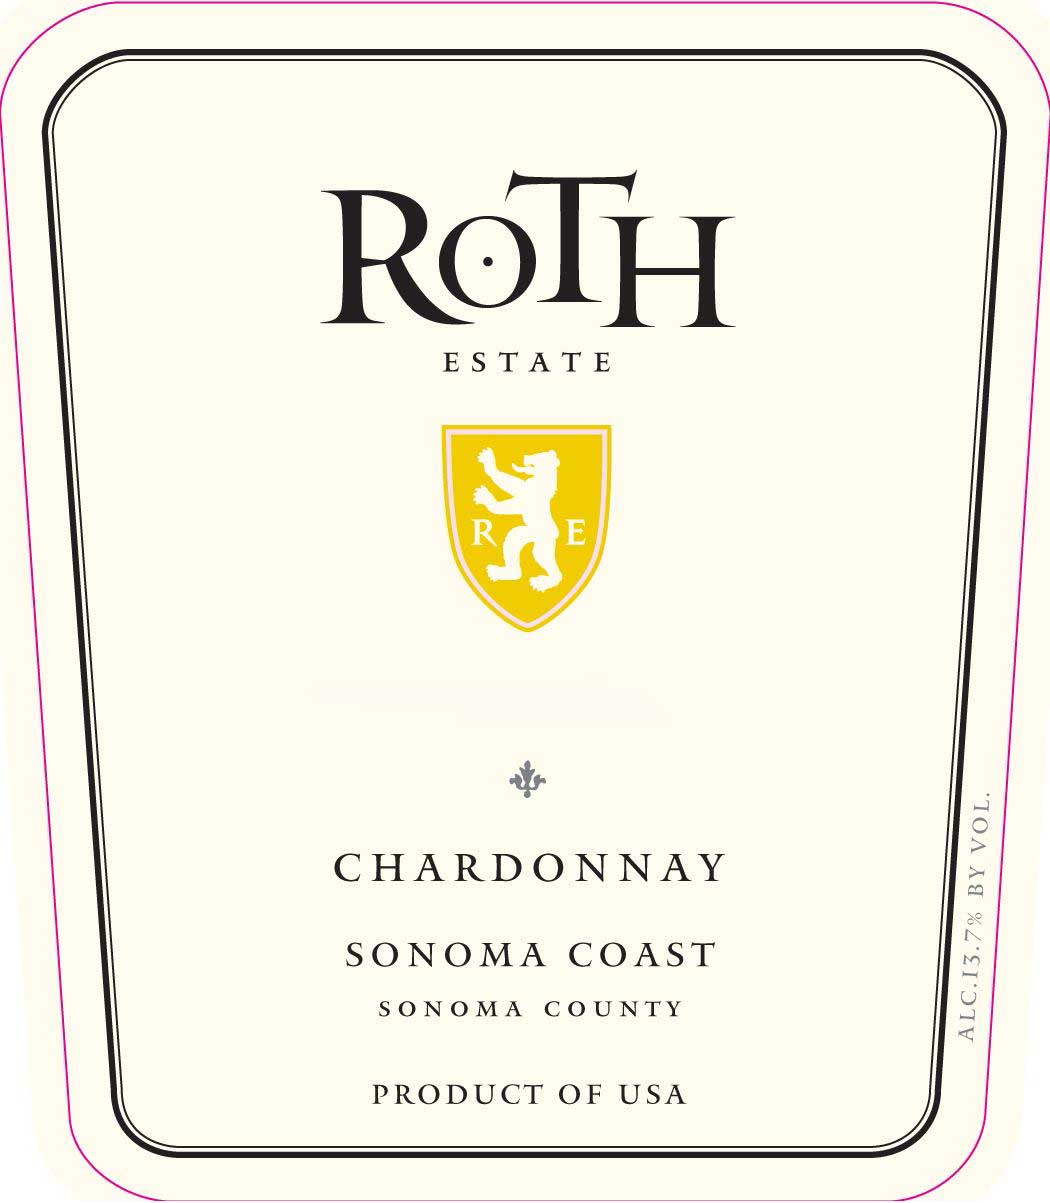 Roth Estate - Chardonnay label